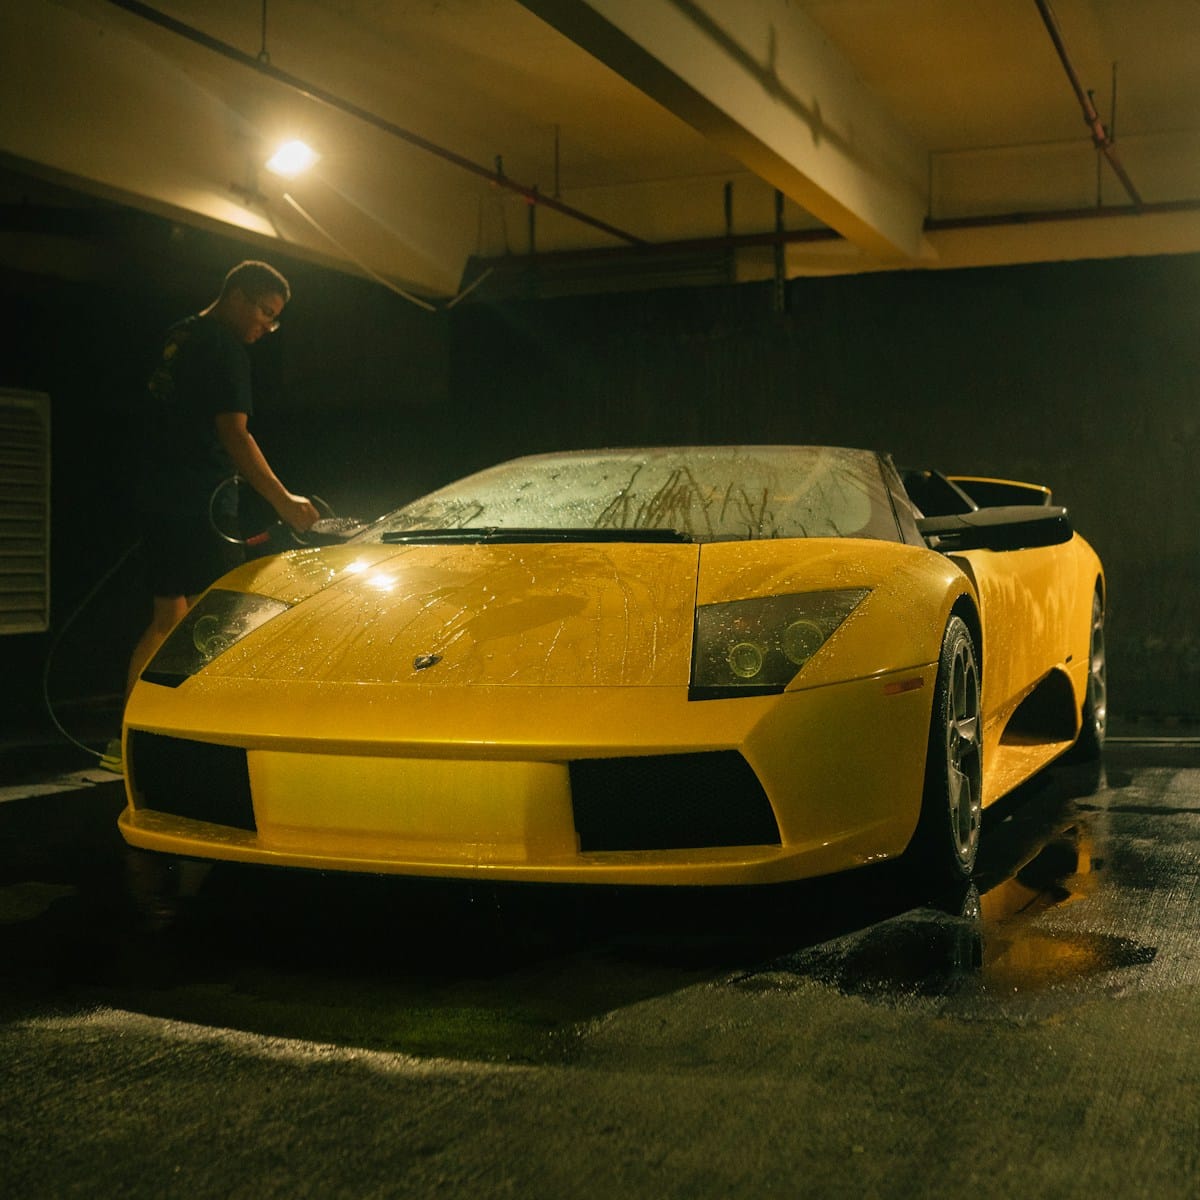 a man washing a yellow sports car in a parking garage